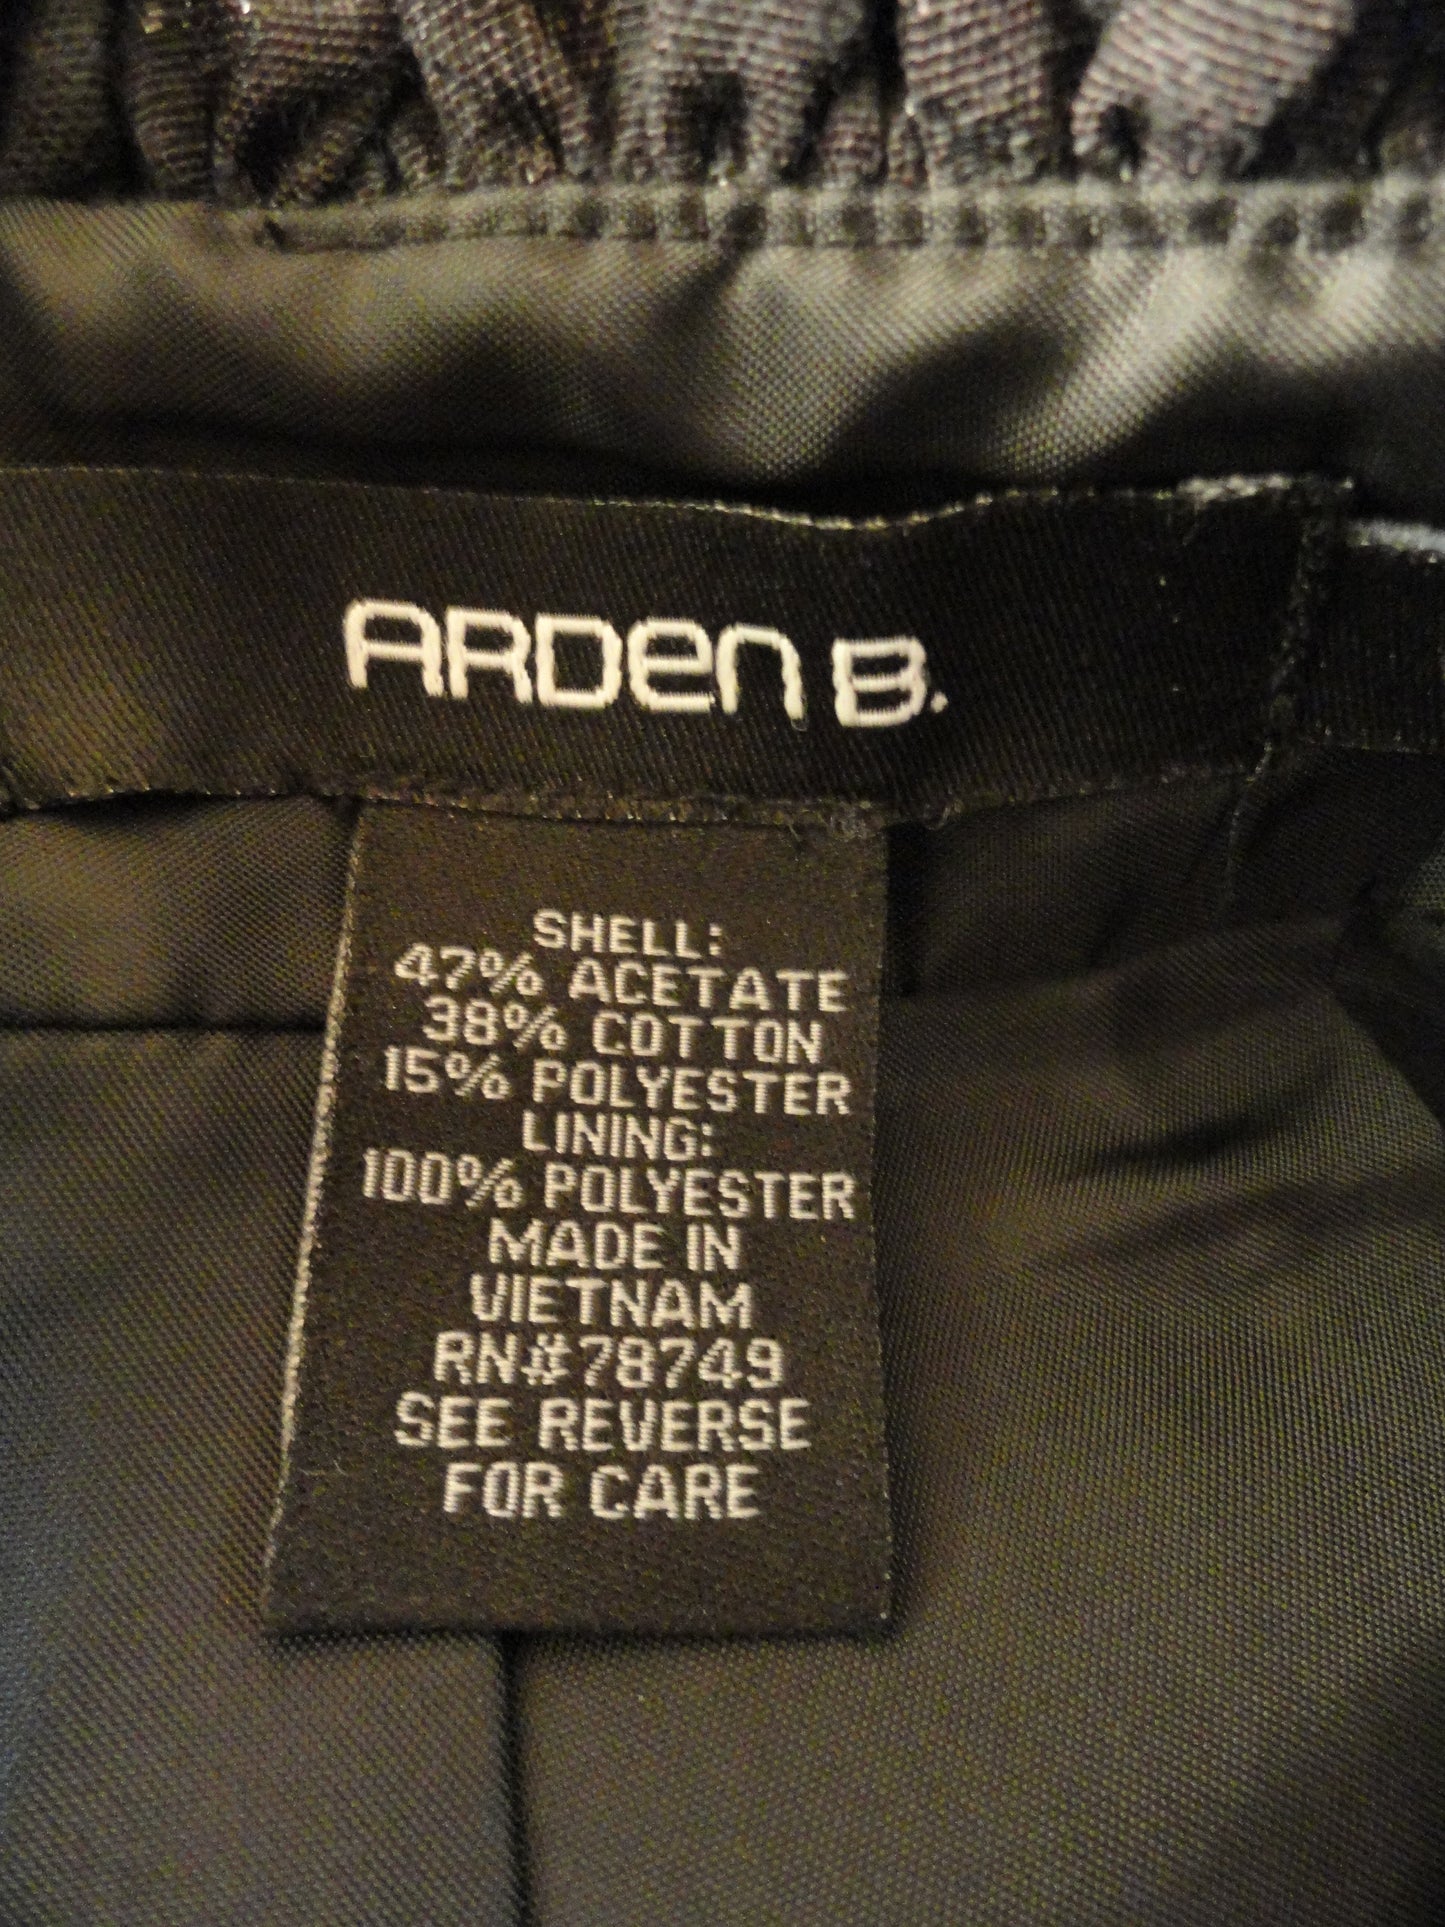 Arden B 80's Skirt Black Metallic Sz 0 SKU 000026